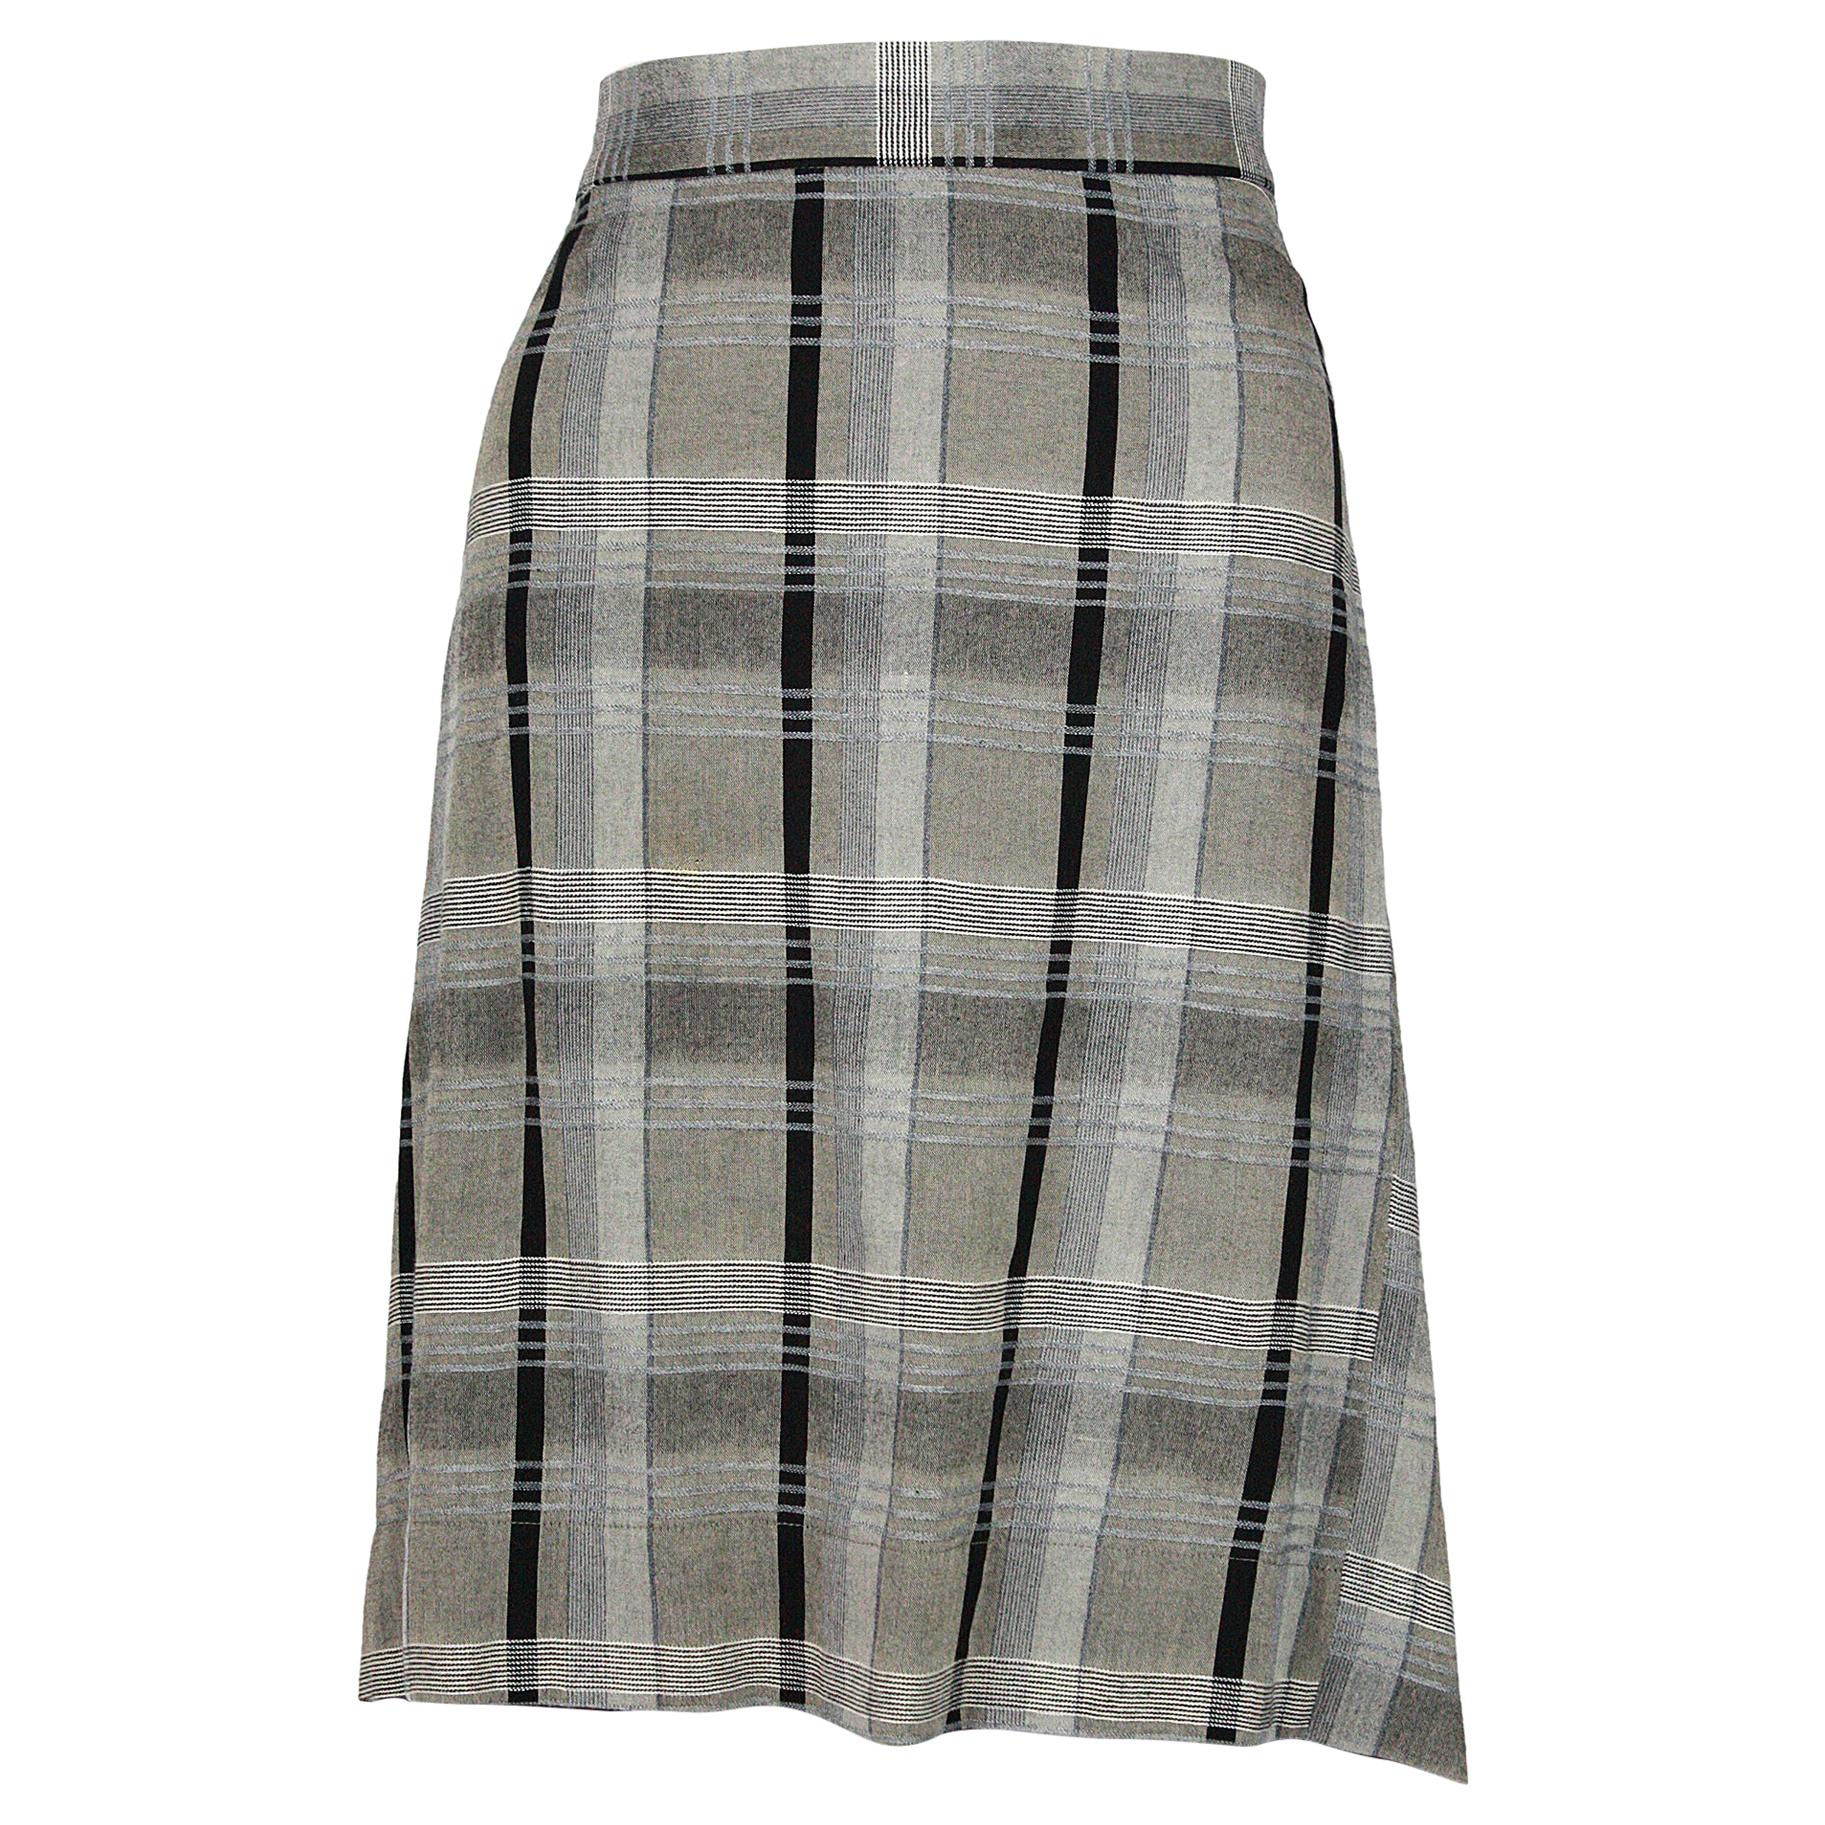 Vivienne Westwood Anglomania Grey and Black Plaid Skirt